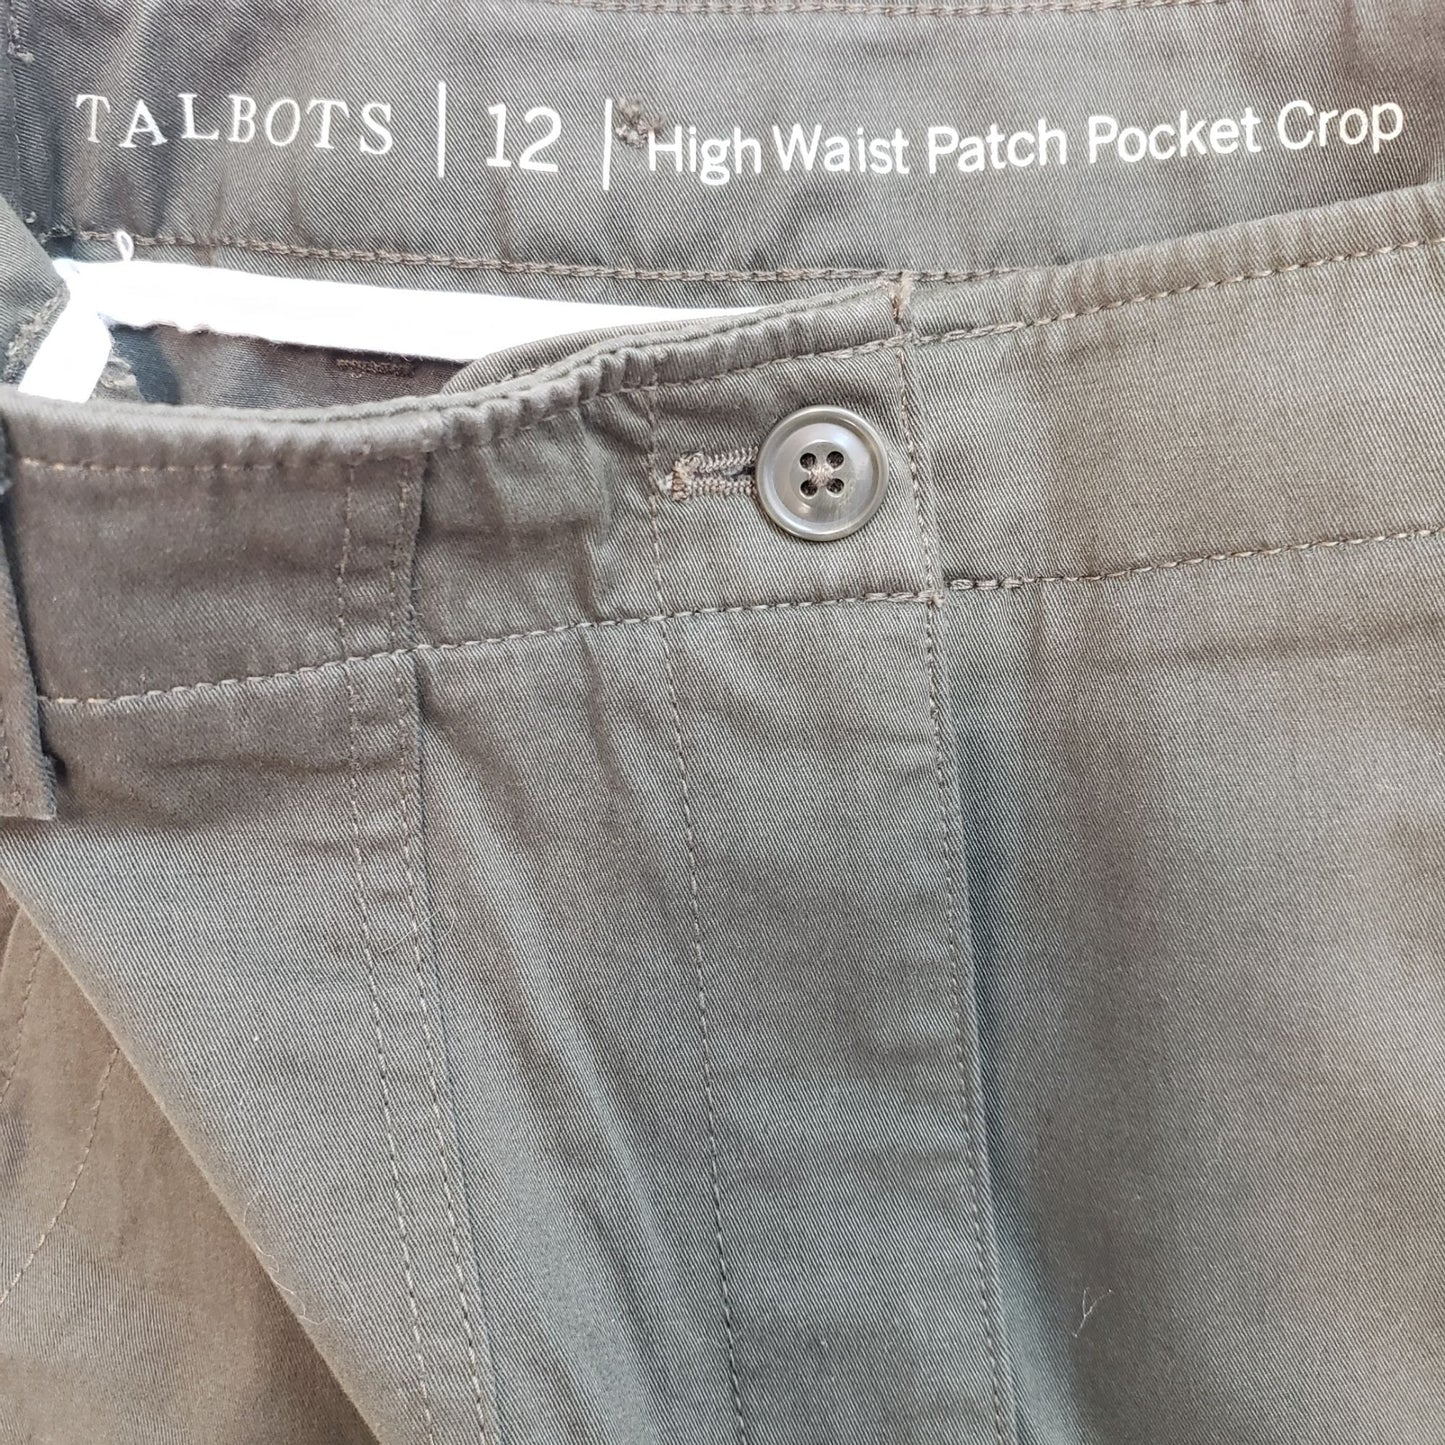 Talbots High Waist Patch Pocket Crop Pants Size 12